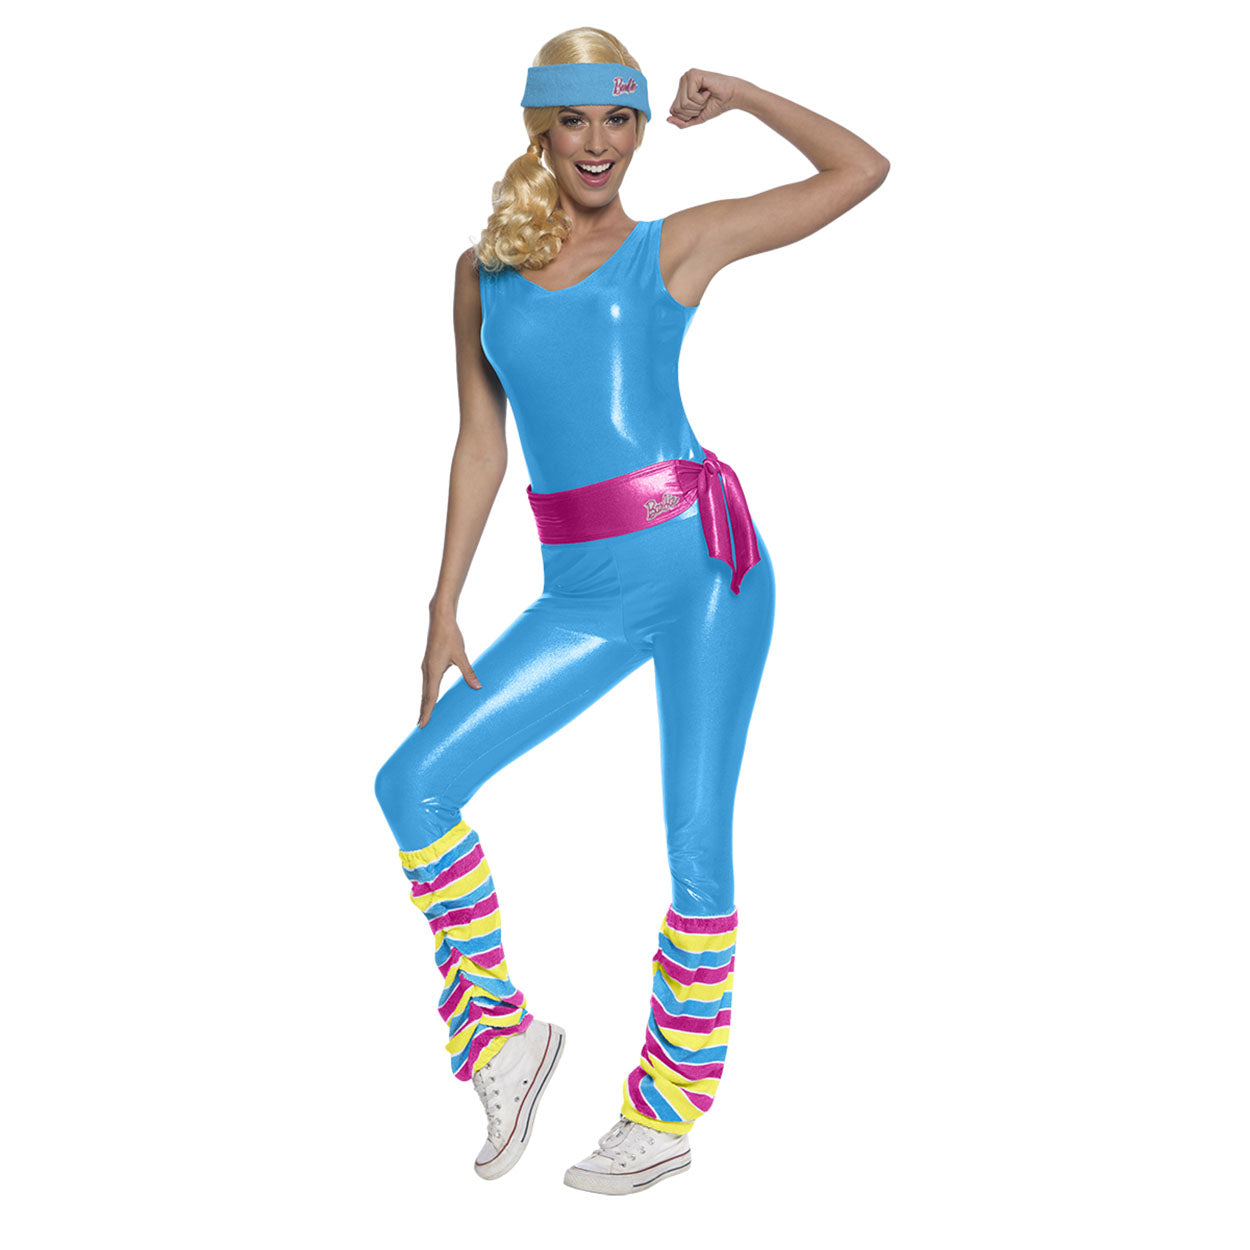 Costumi Donna Barbie Atleta Sportiva Tg 36/42